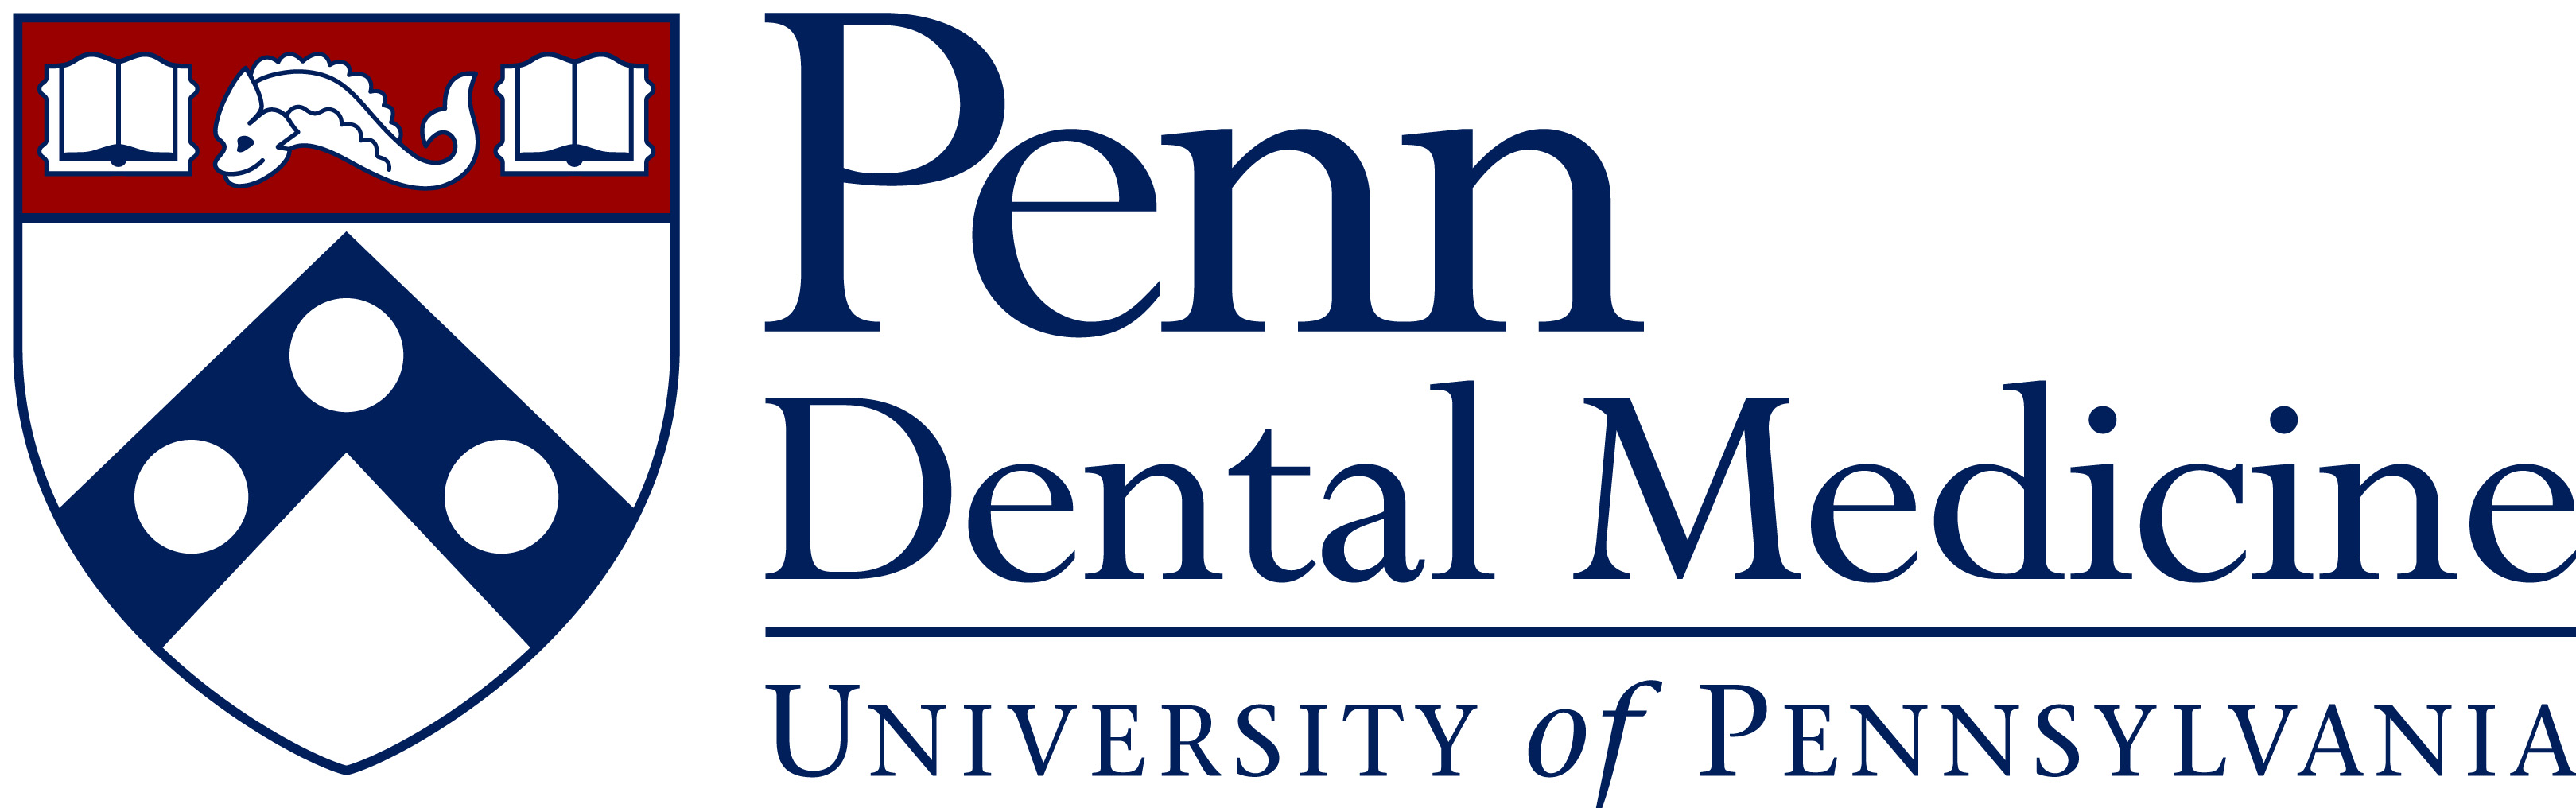 Logo for University of Pennsylvania